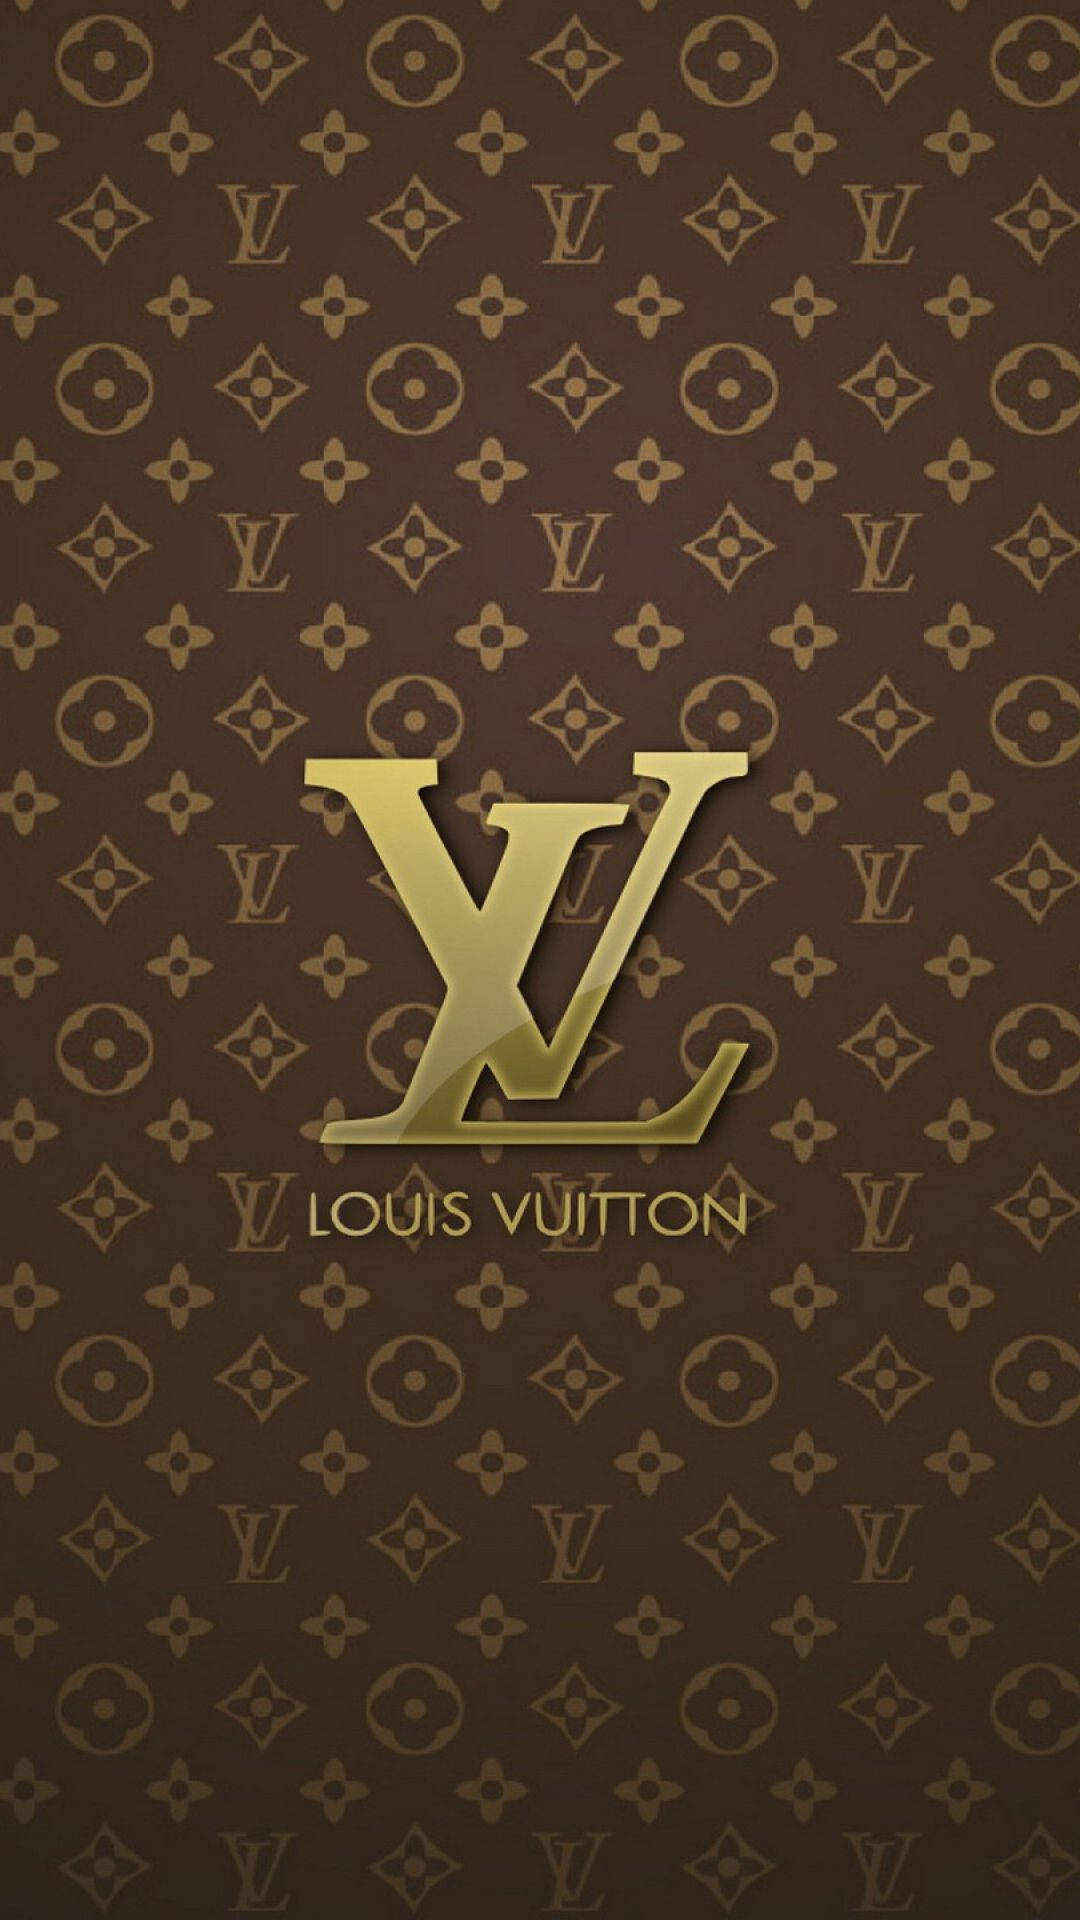 Louis Vuitton Background Photos